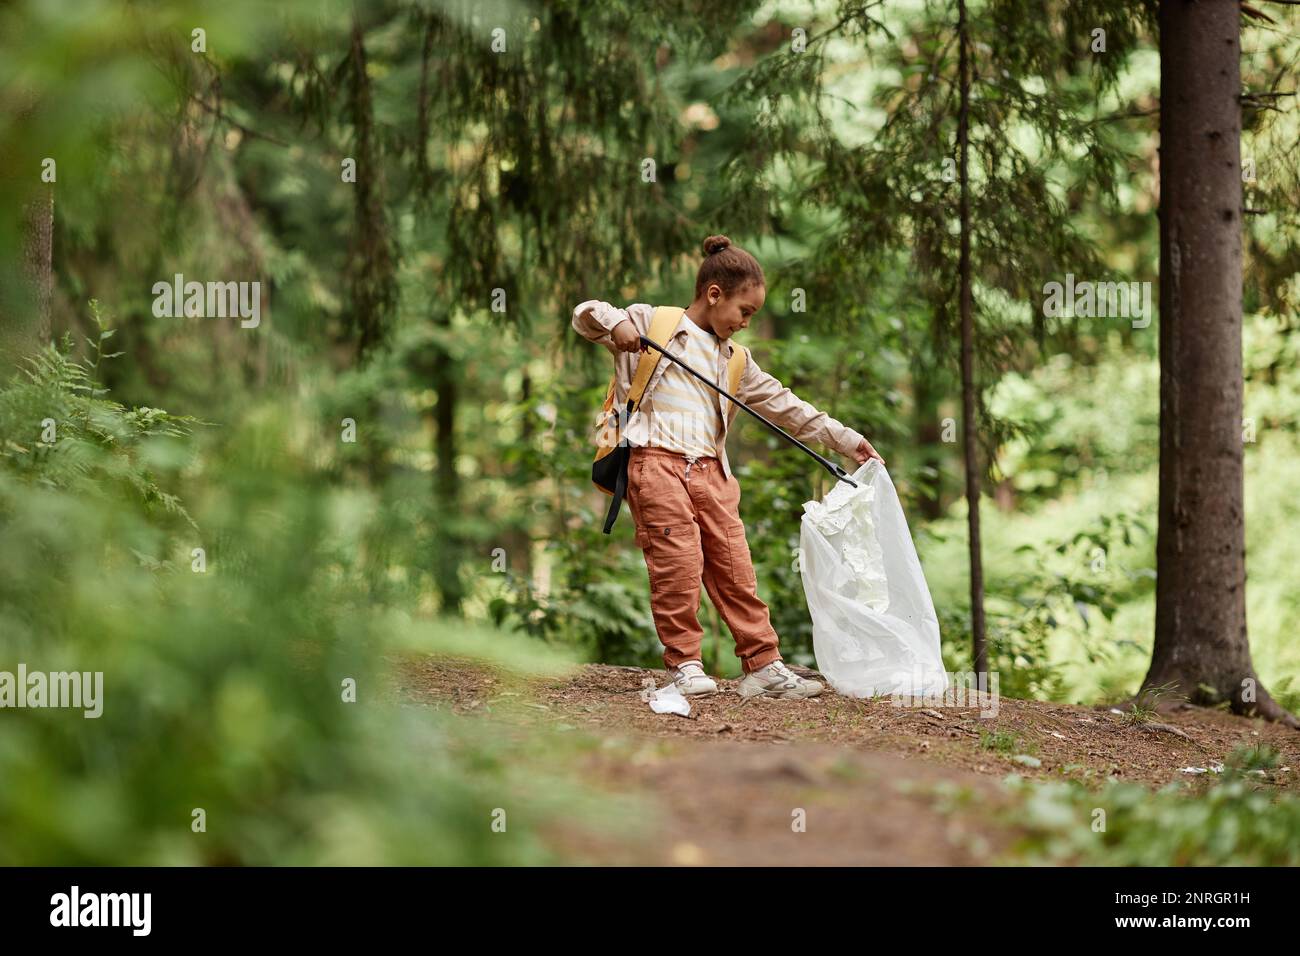 Full length portrait of black little girl picking up plastic bottles in nature trail, copy space Stock Photo